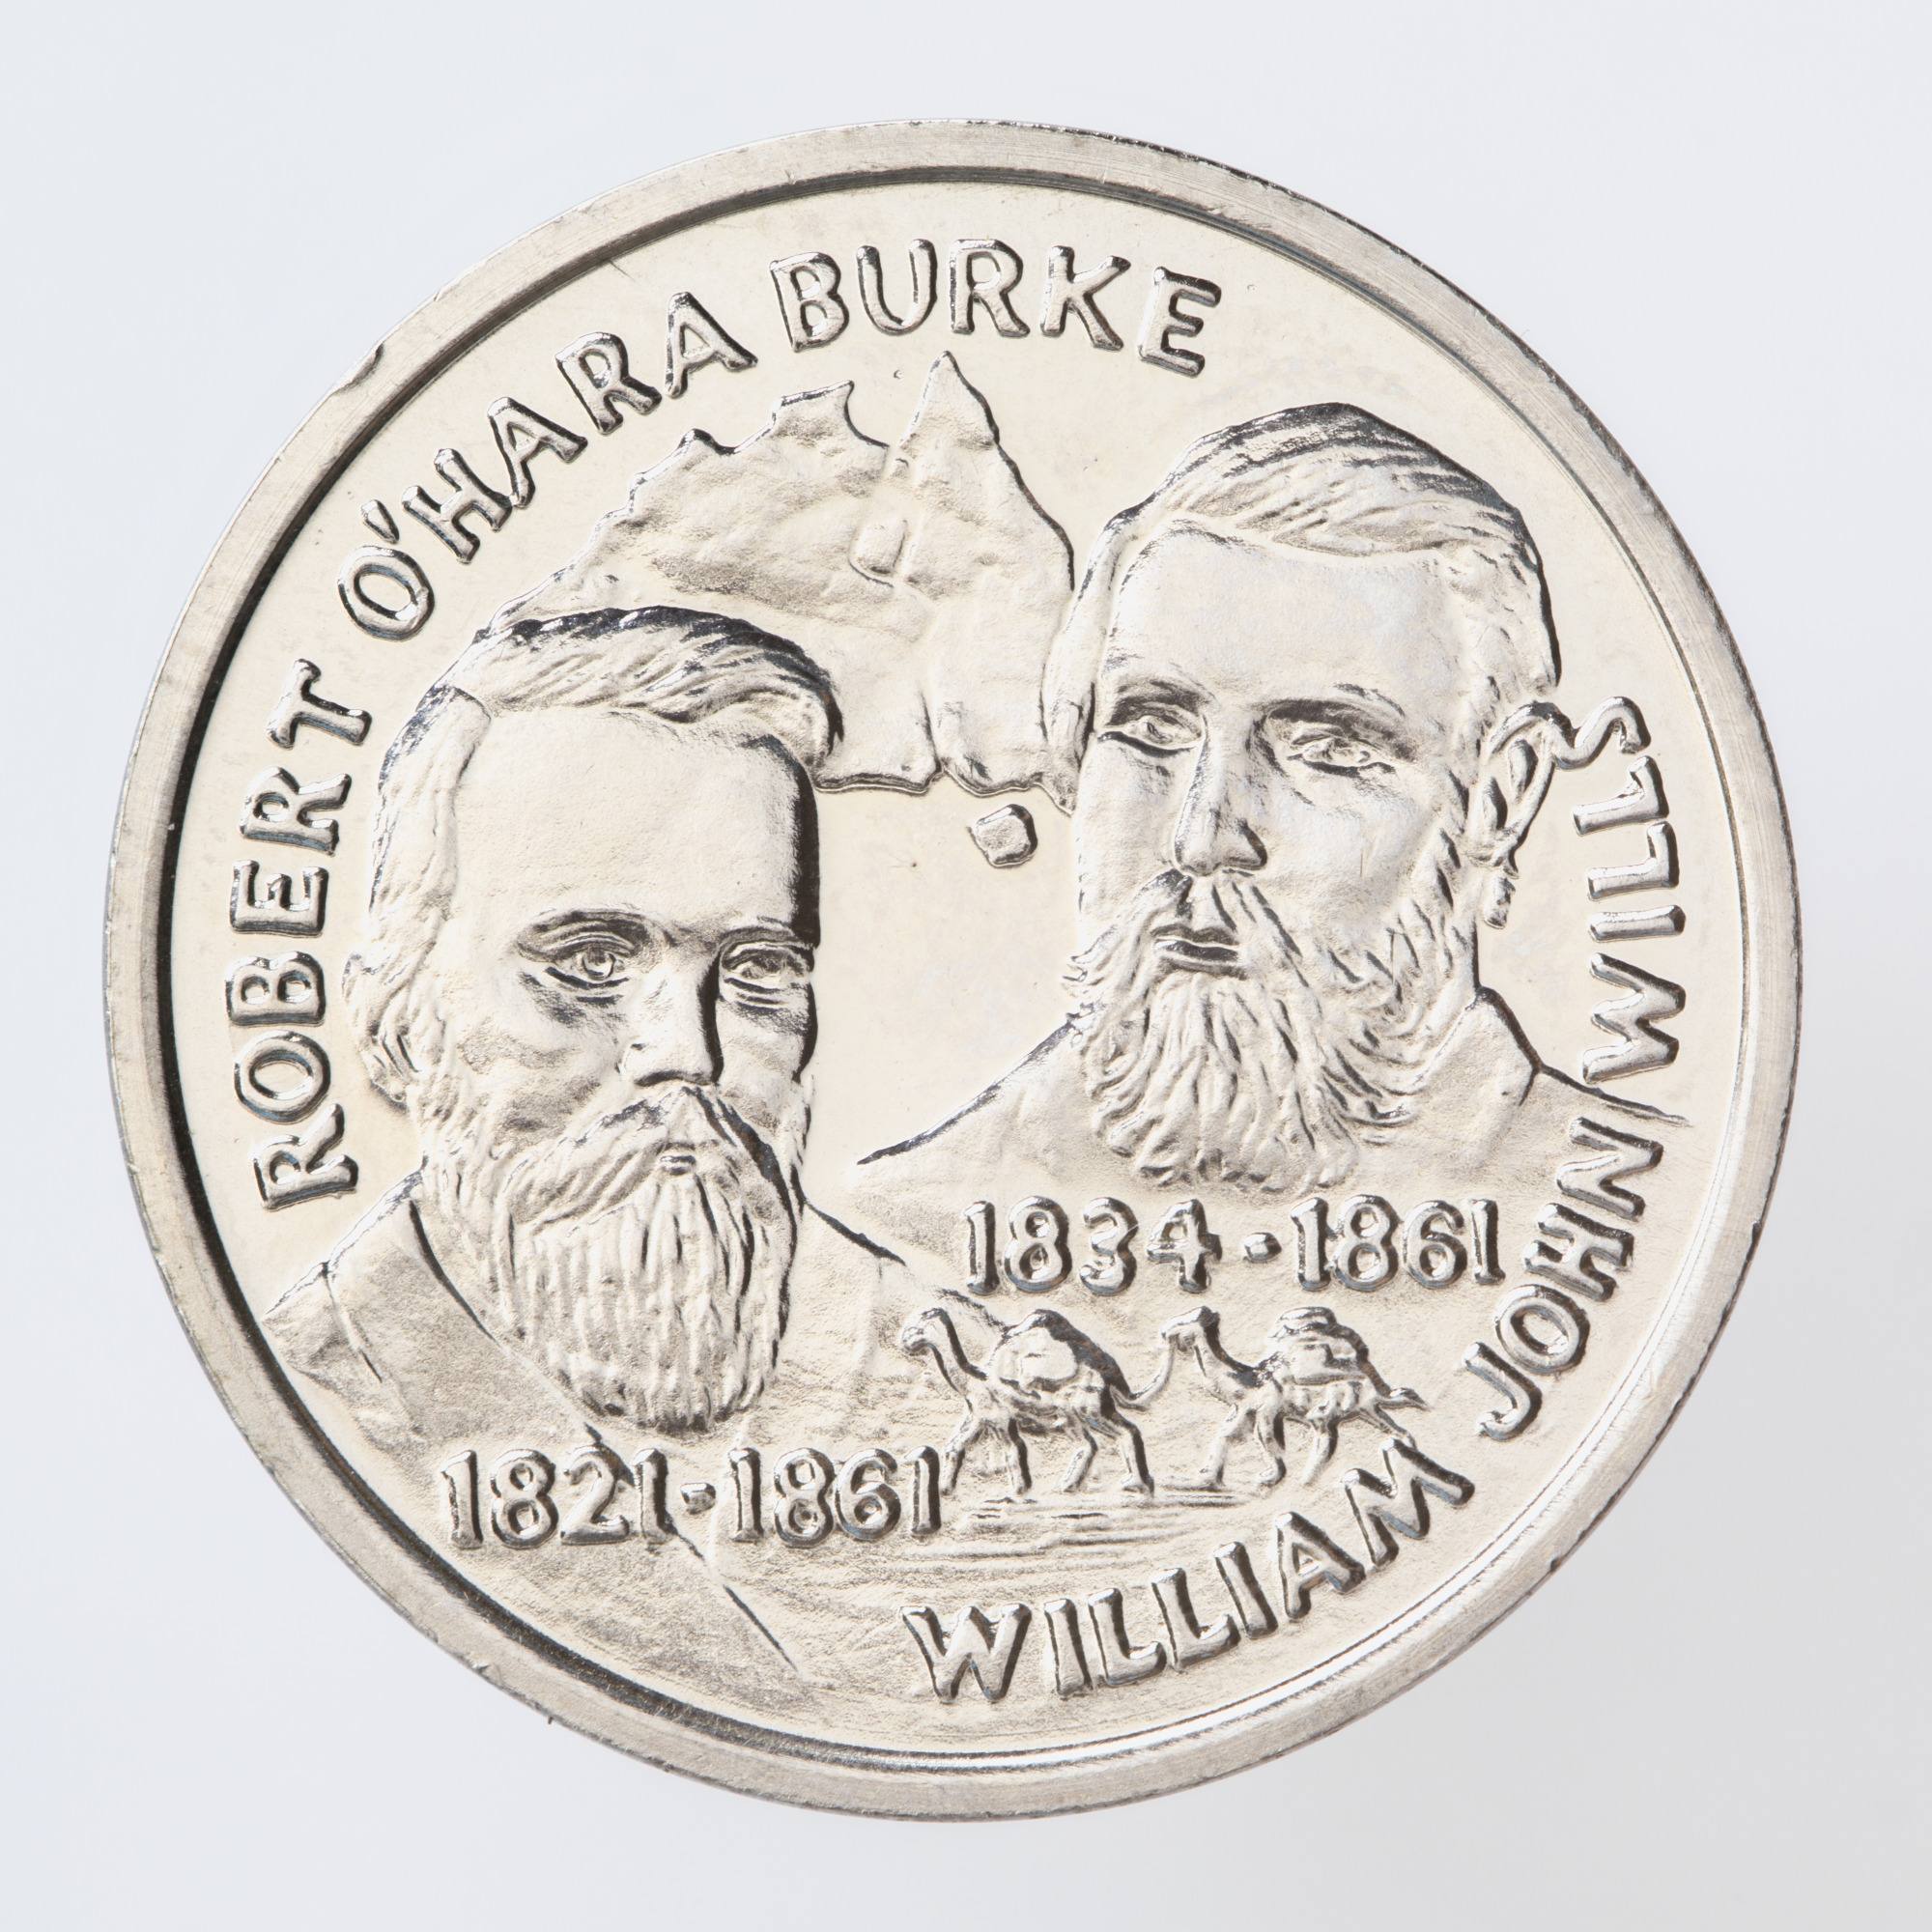 Australian bicentennial commemorative medal depicting explorers Burke and Wills.